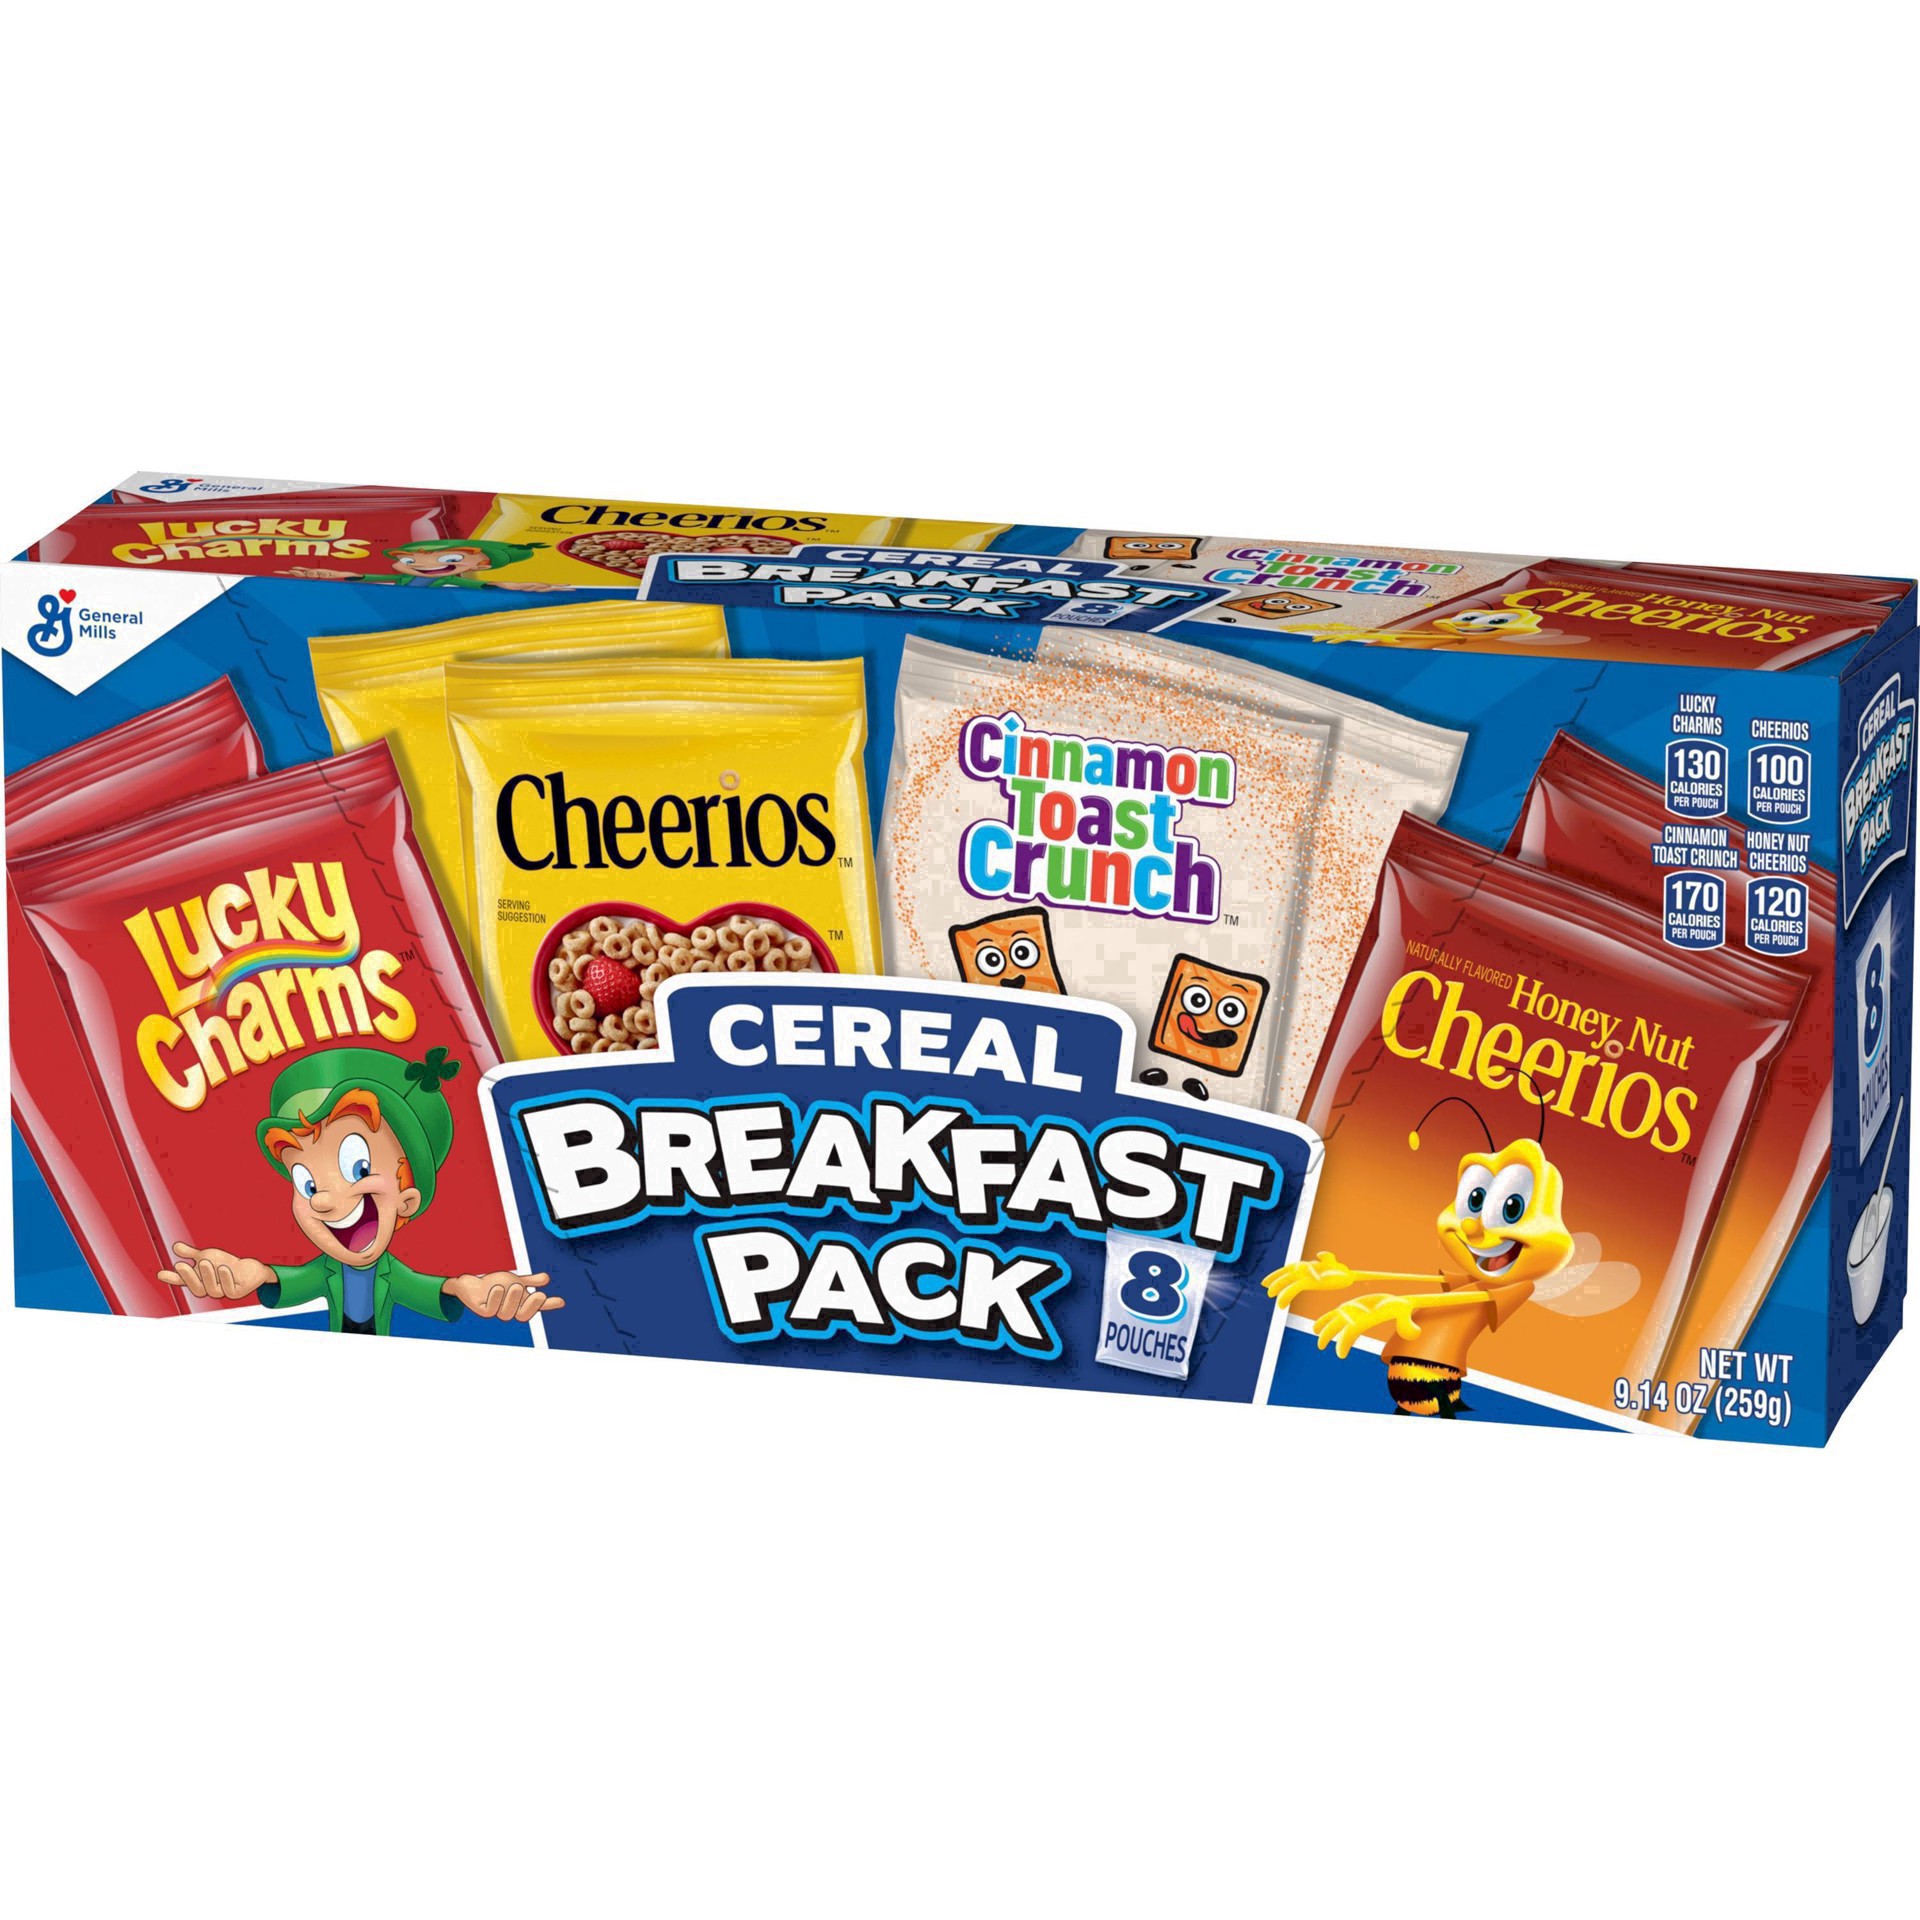 slide 80 of 141, General Mills Breakfast Pack Cereal, 8 ct